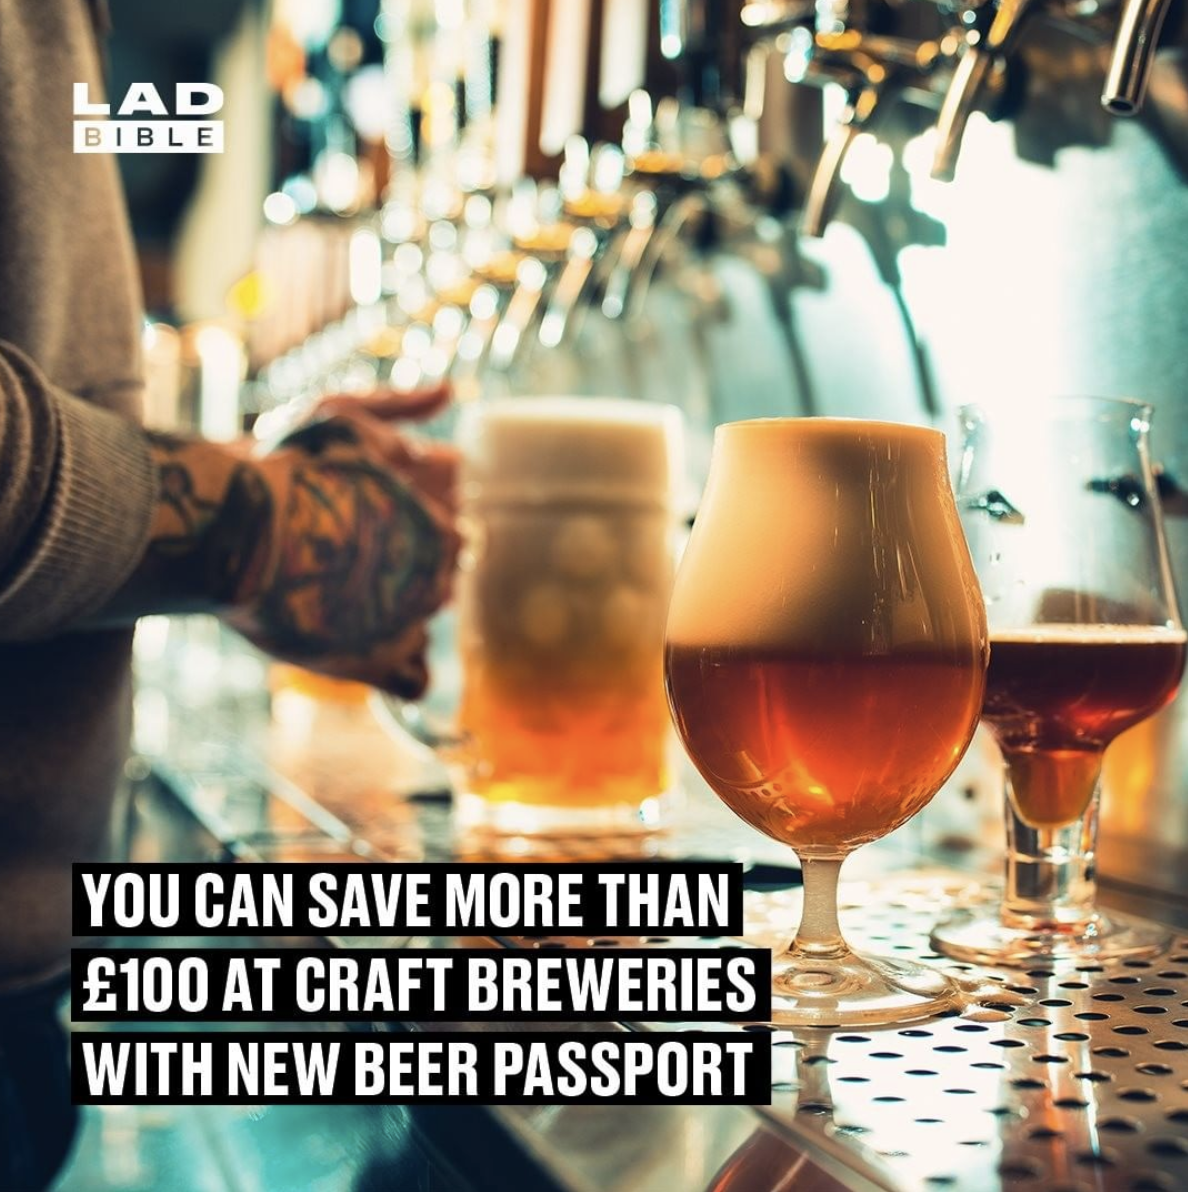 Canopy Brewery - Beer Passport Partner Brewery